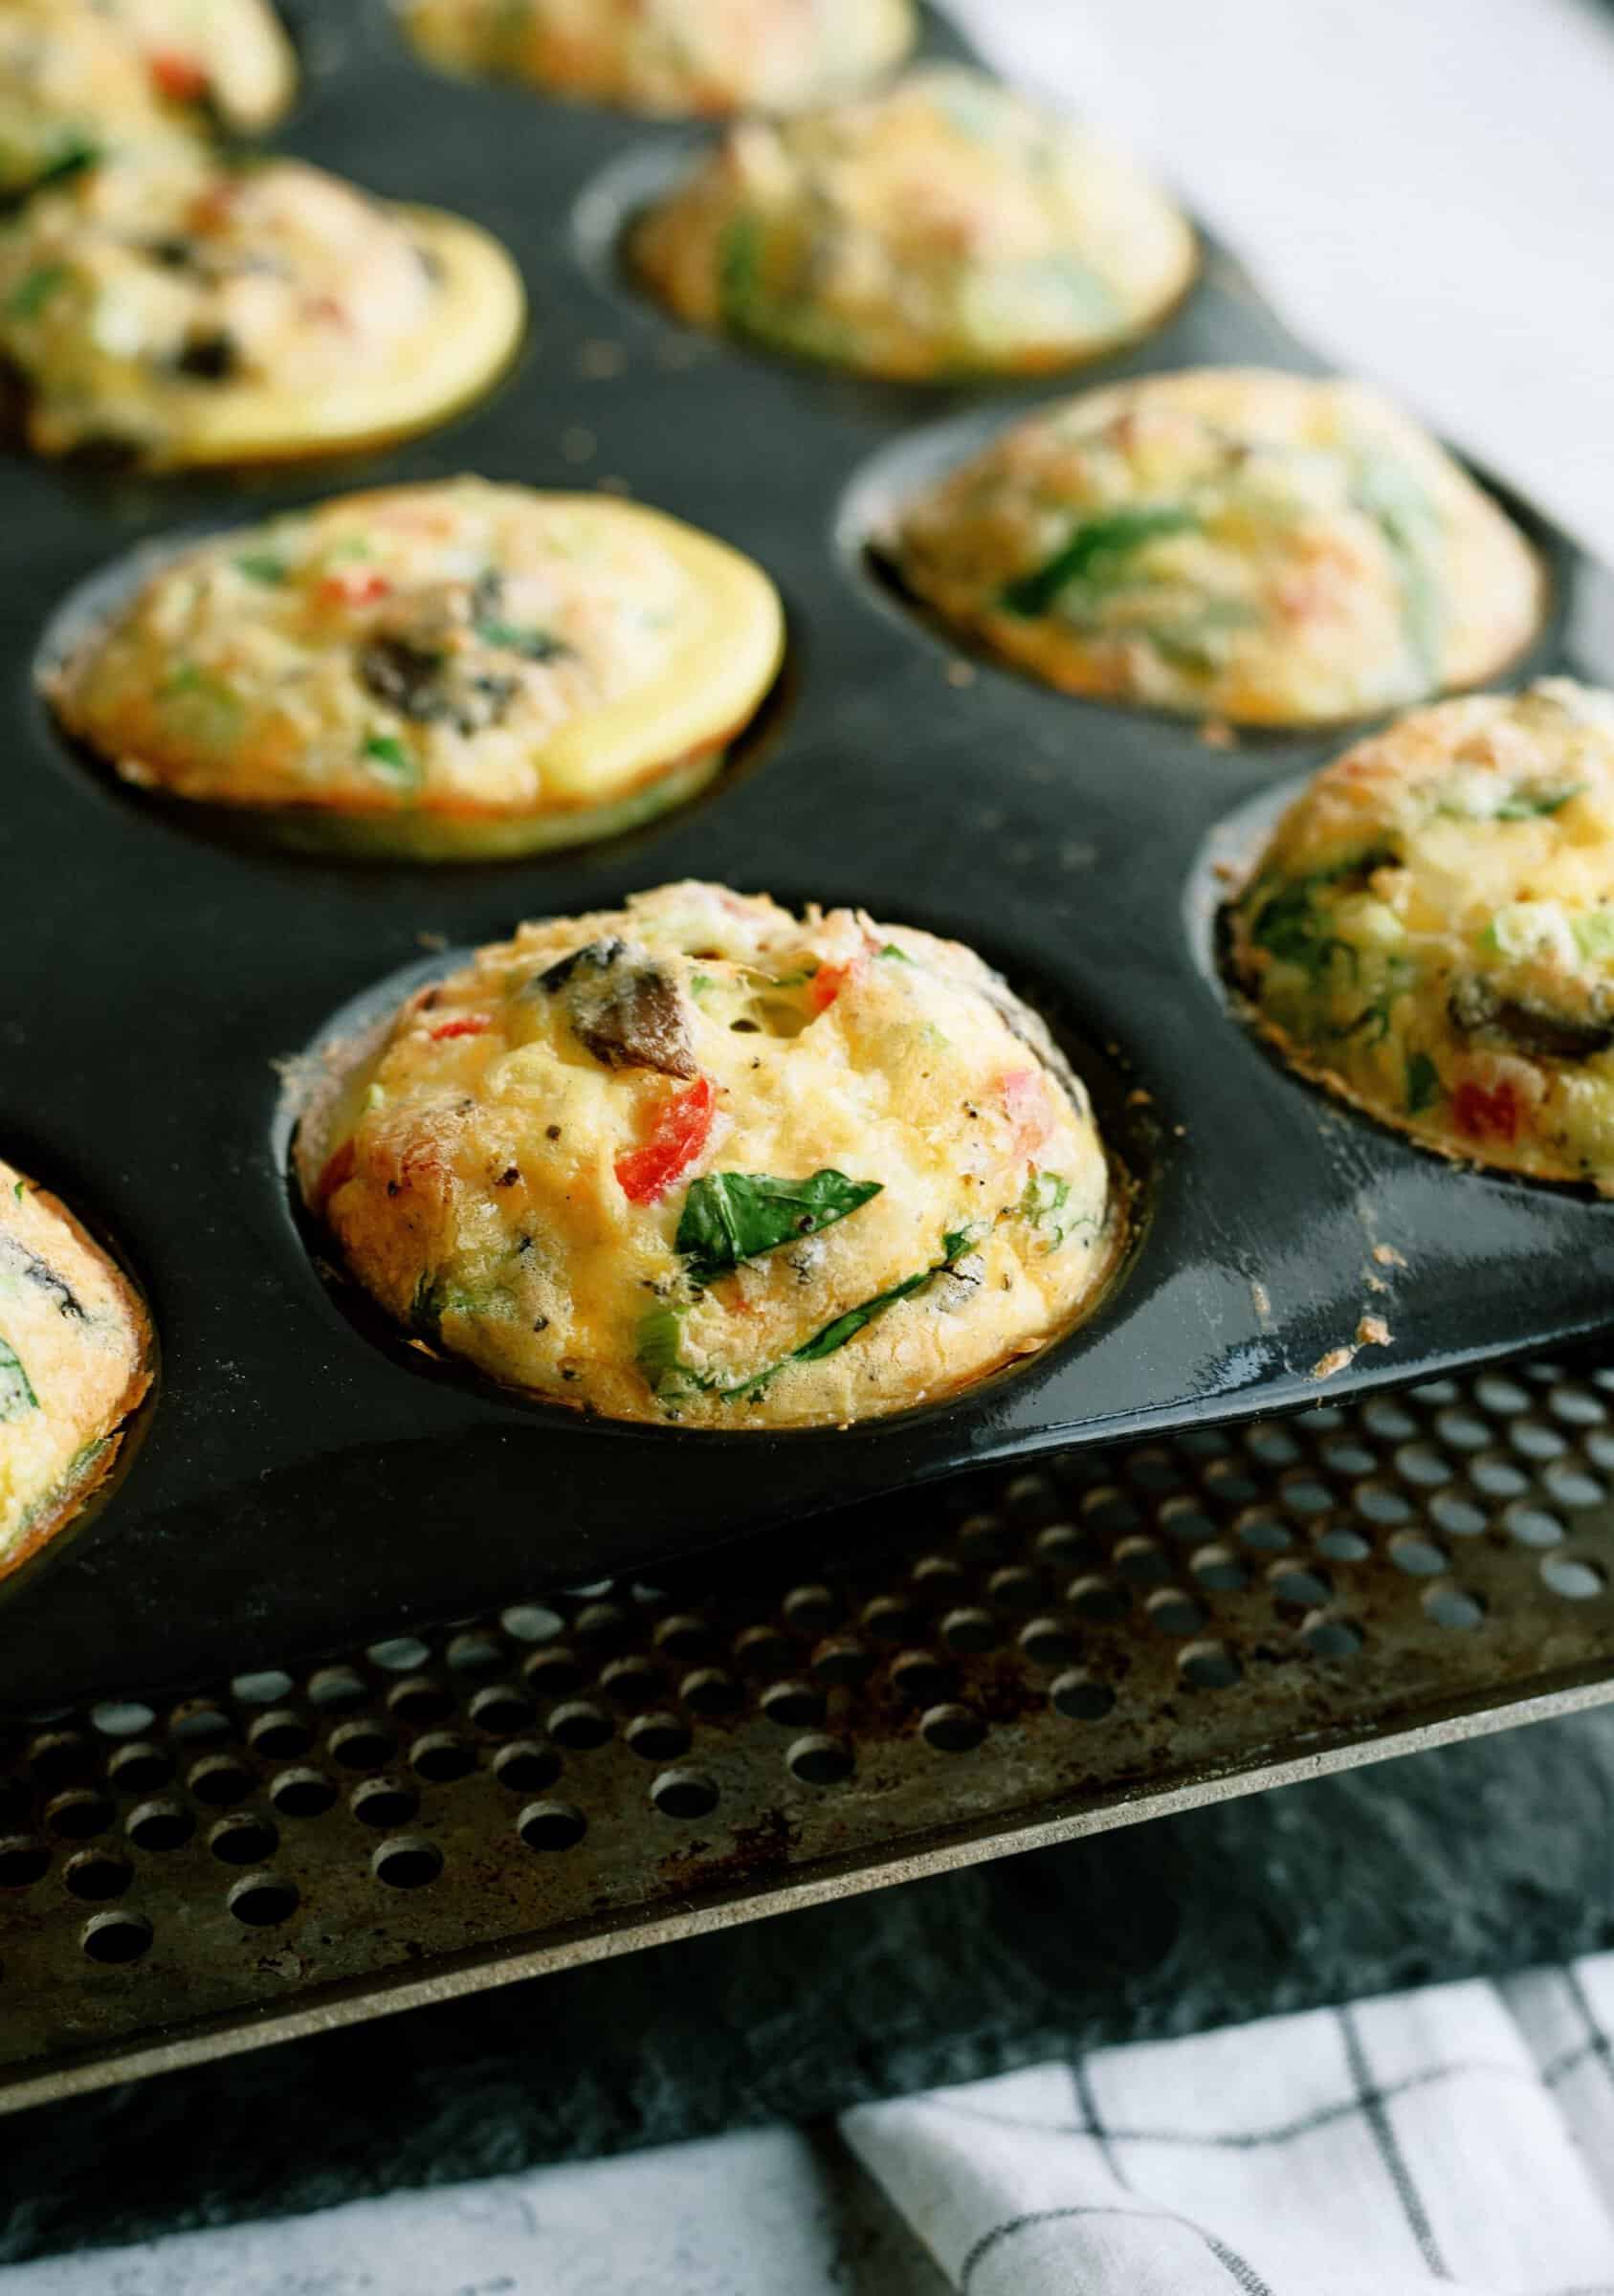 https://www.sixsistersstuff.com/wp-content/uploads/2020/01/scrambled-egg-breakfast-muffins-in-a-muffin-tin-scaled.jpg